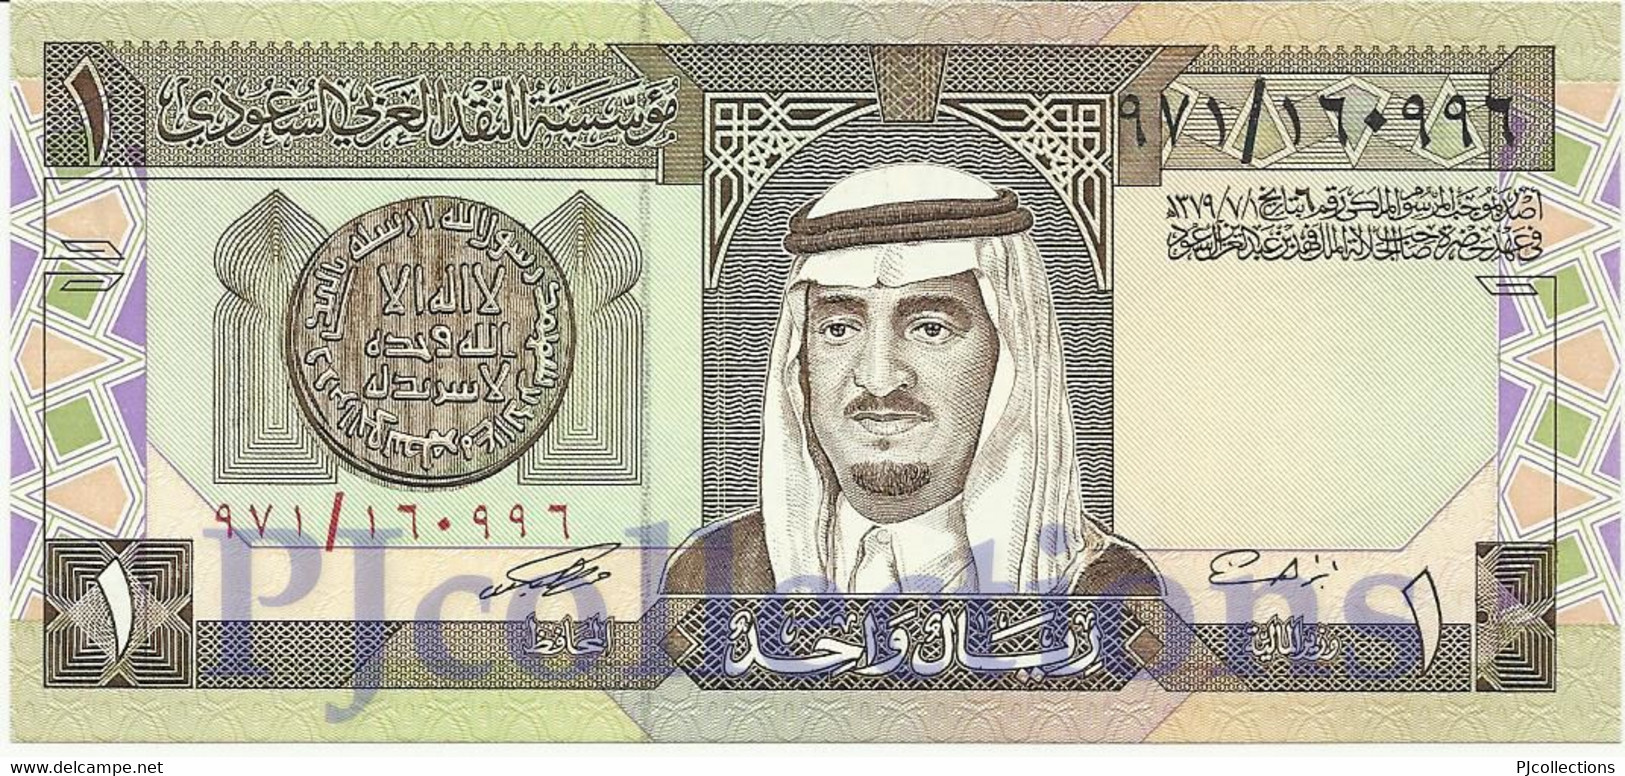 LOT SAUDI ARABIA 1 RIYAL 1984 PICK 21d UNC X 5 PCS - Arabie Saoudite